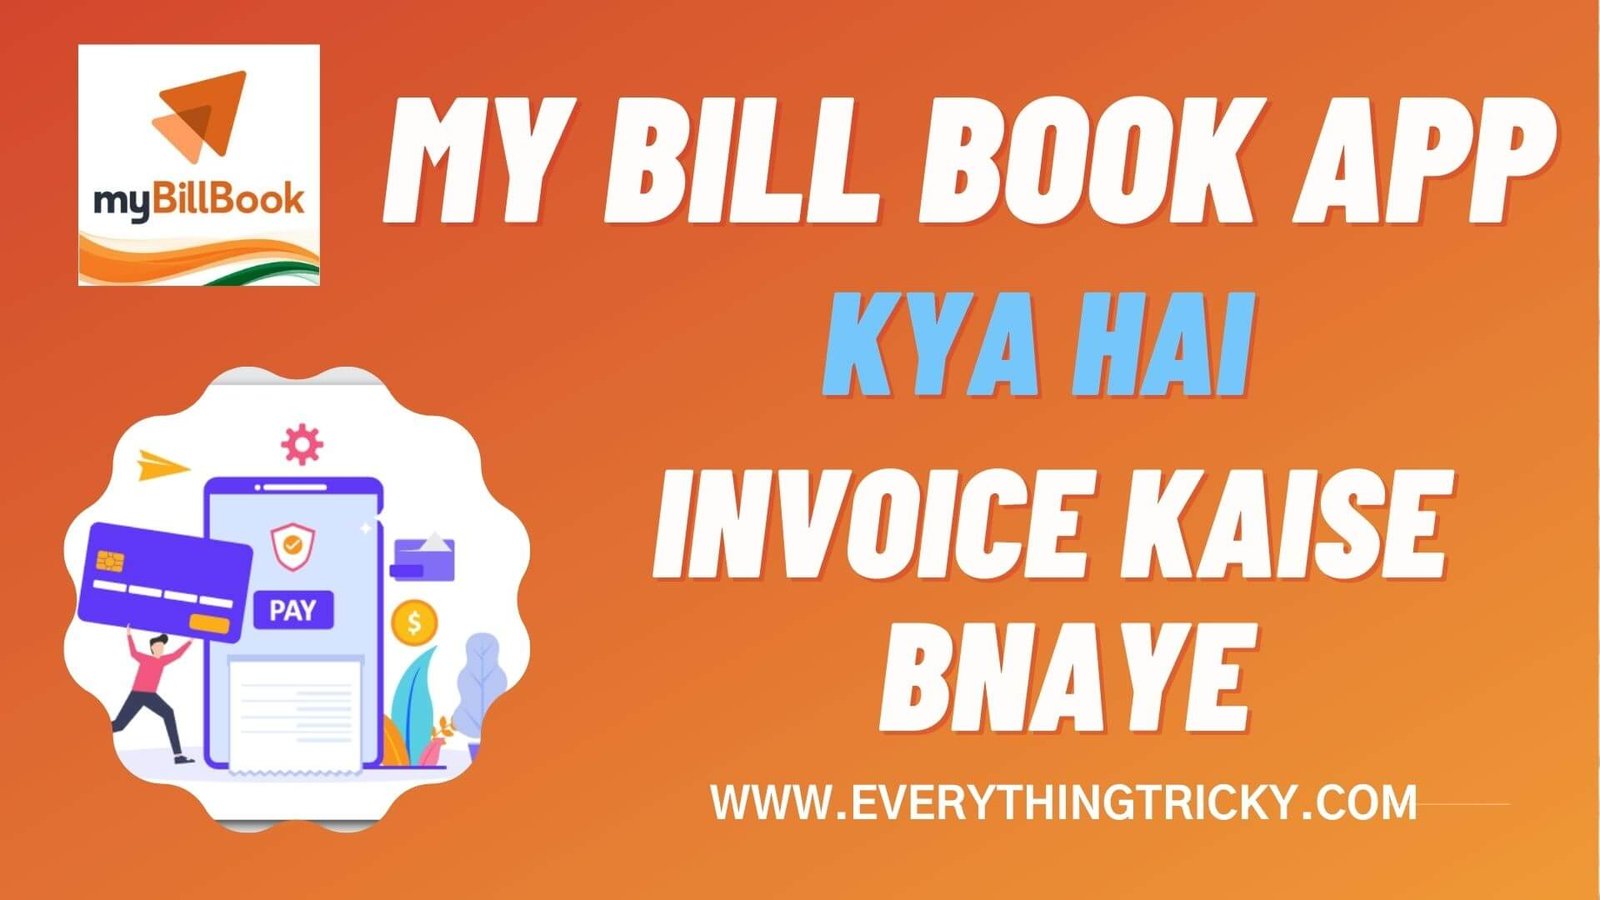 My Bill Book App kya hai